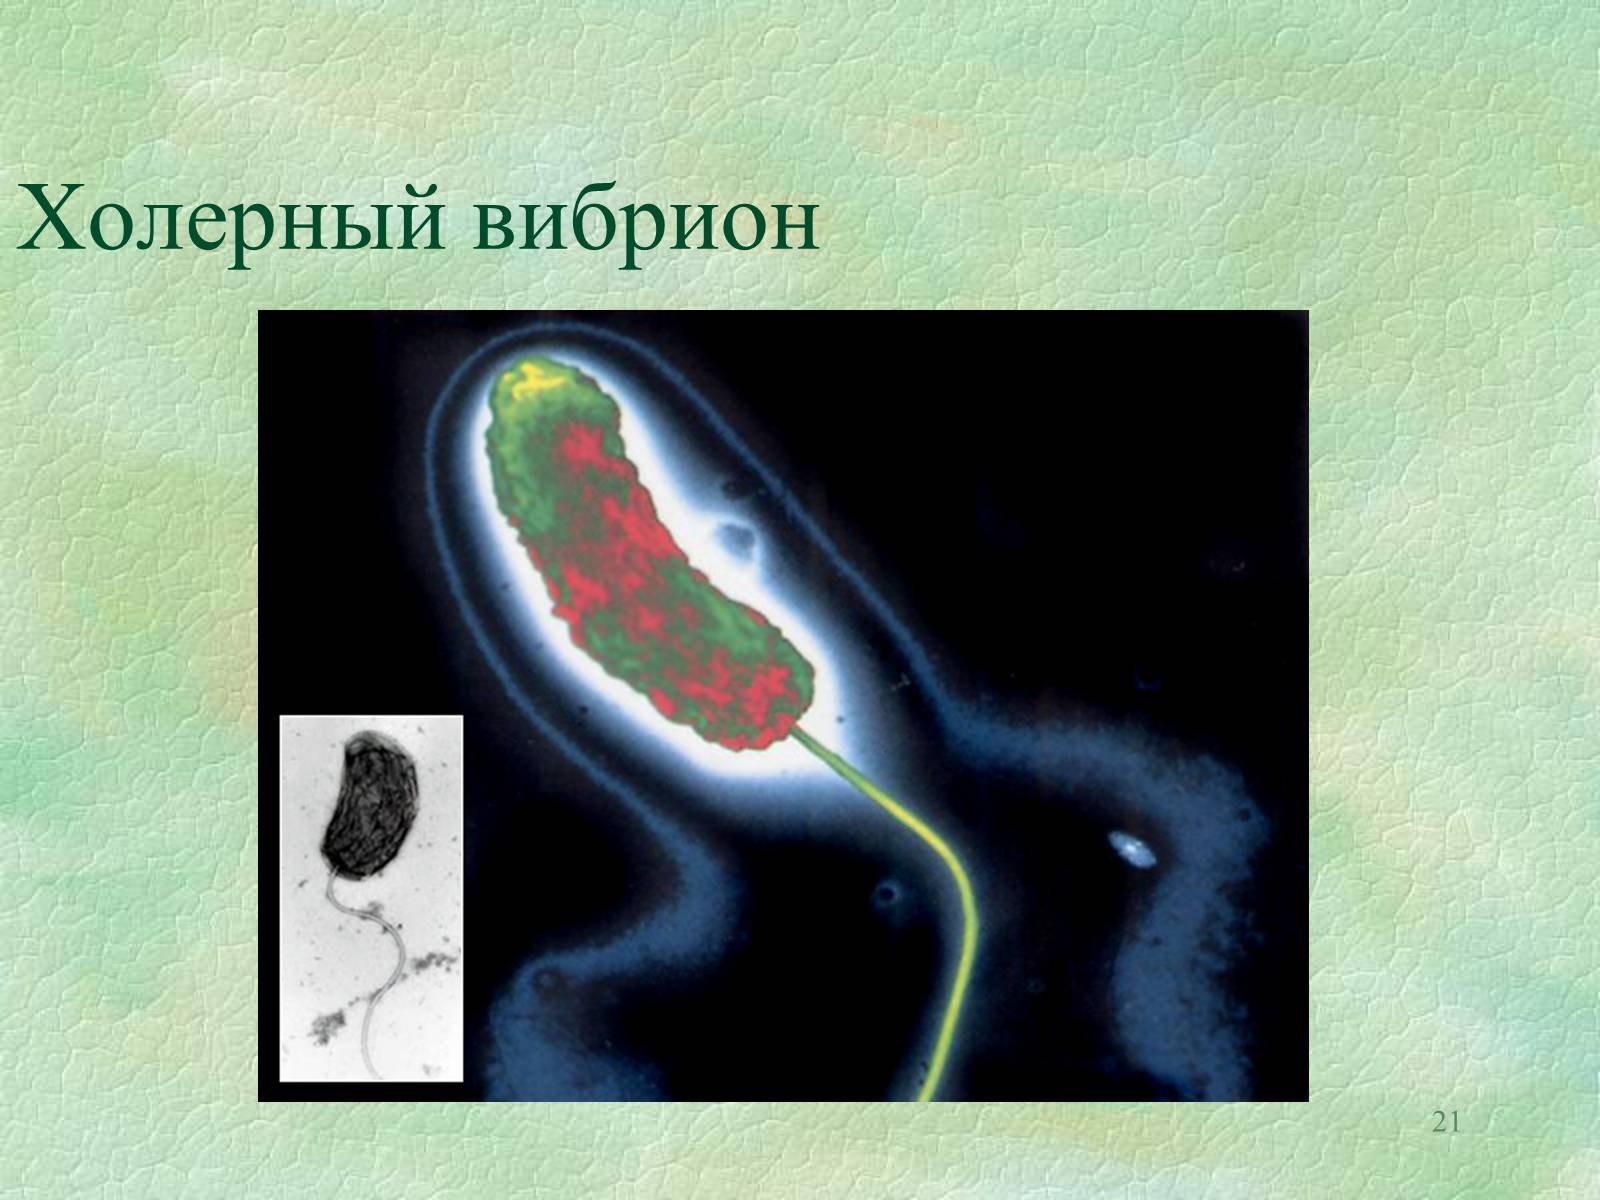 Презентація на тему «Значение бактерий в природе и жизни человека» - Слайд #21